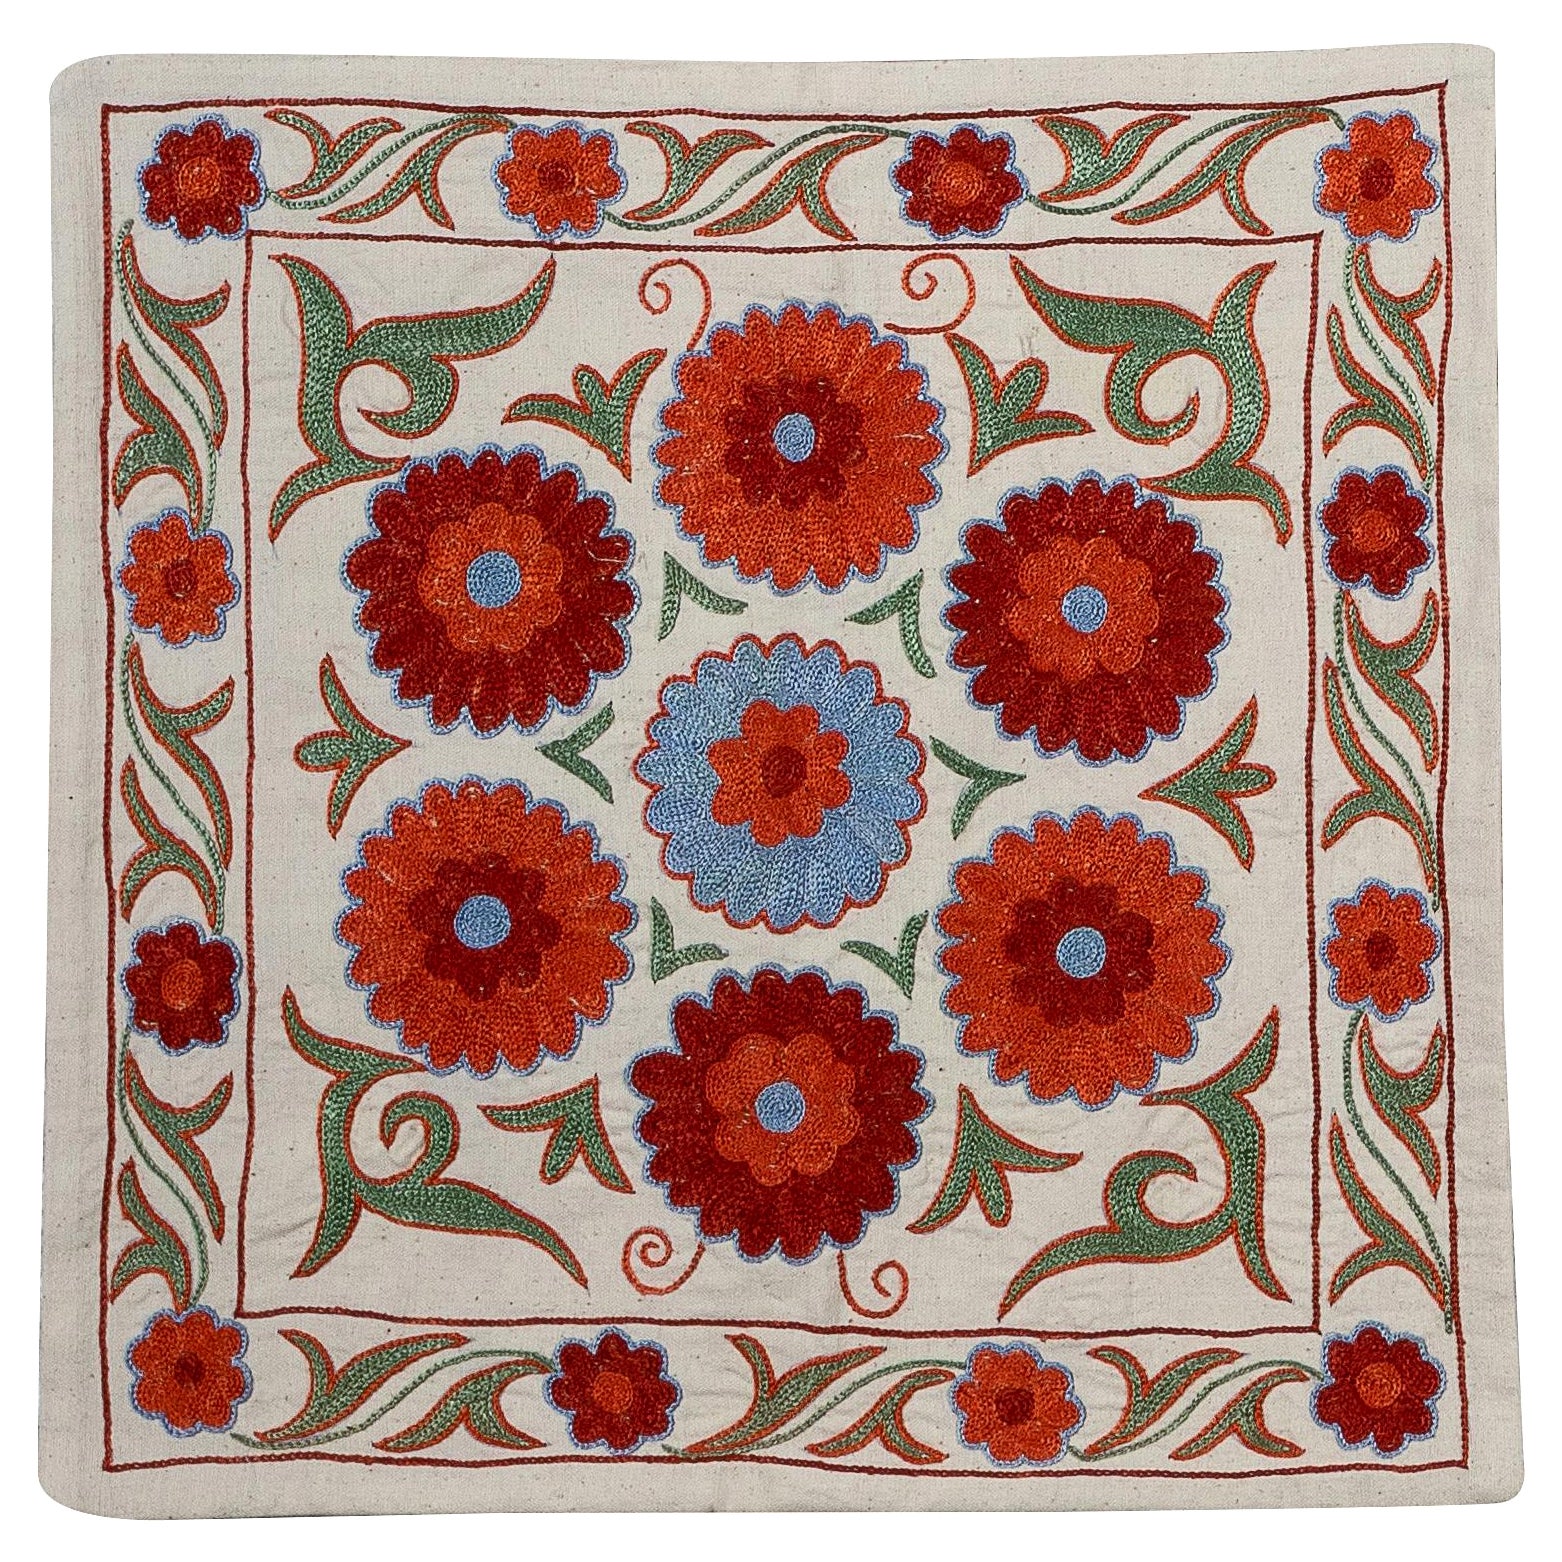 Uzbek Suzani Fabric Throw Pillow, Embroidered Cotton & Silk Cushion Cover